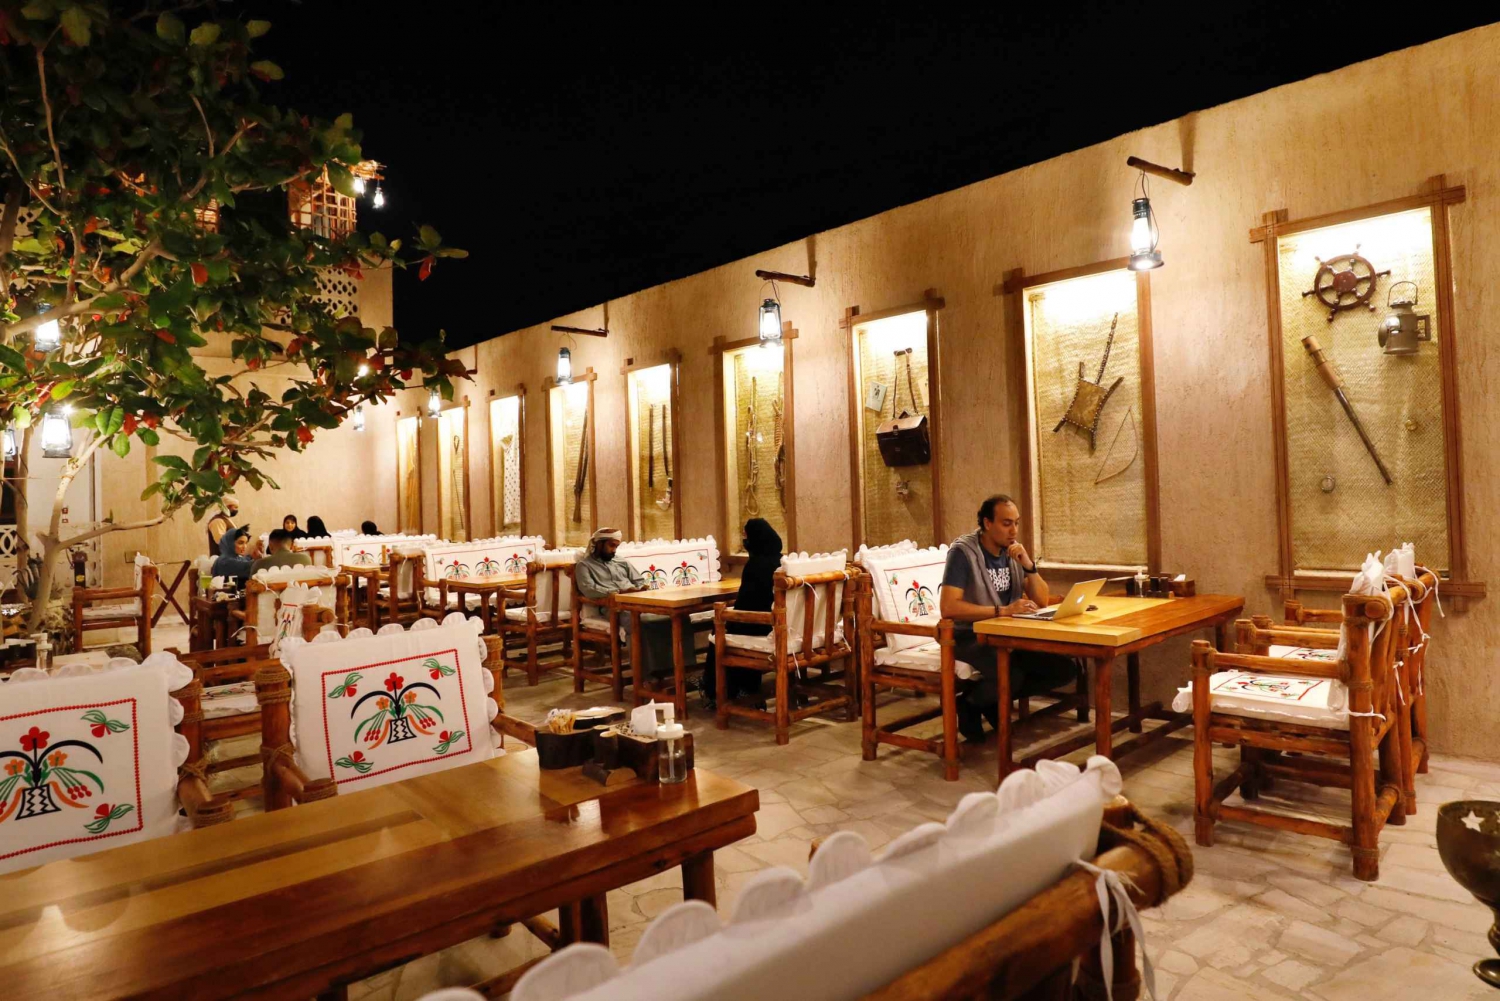 Dubai: Ethnic Emirati Dining Experience